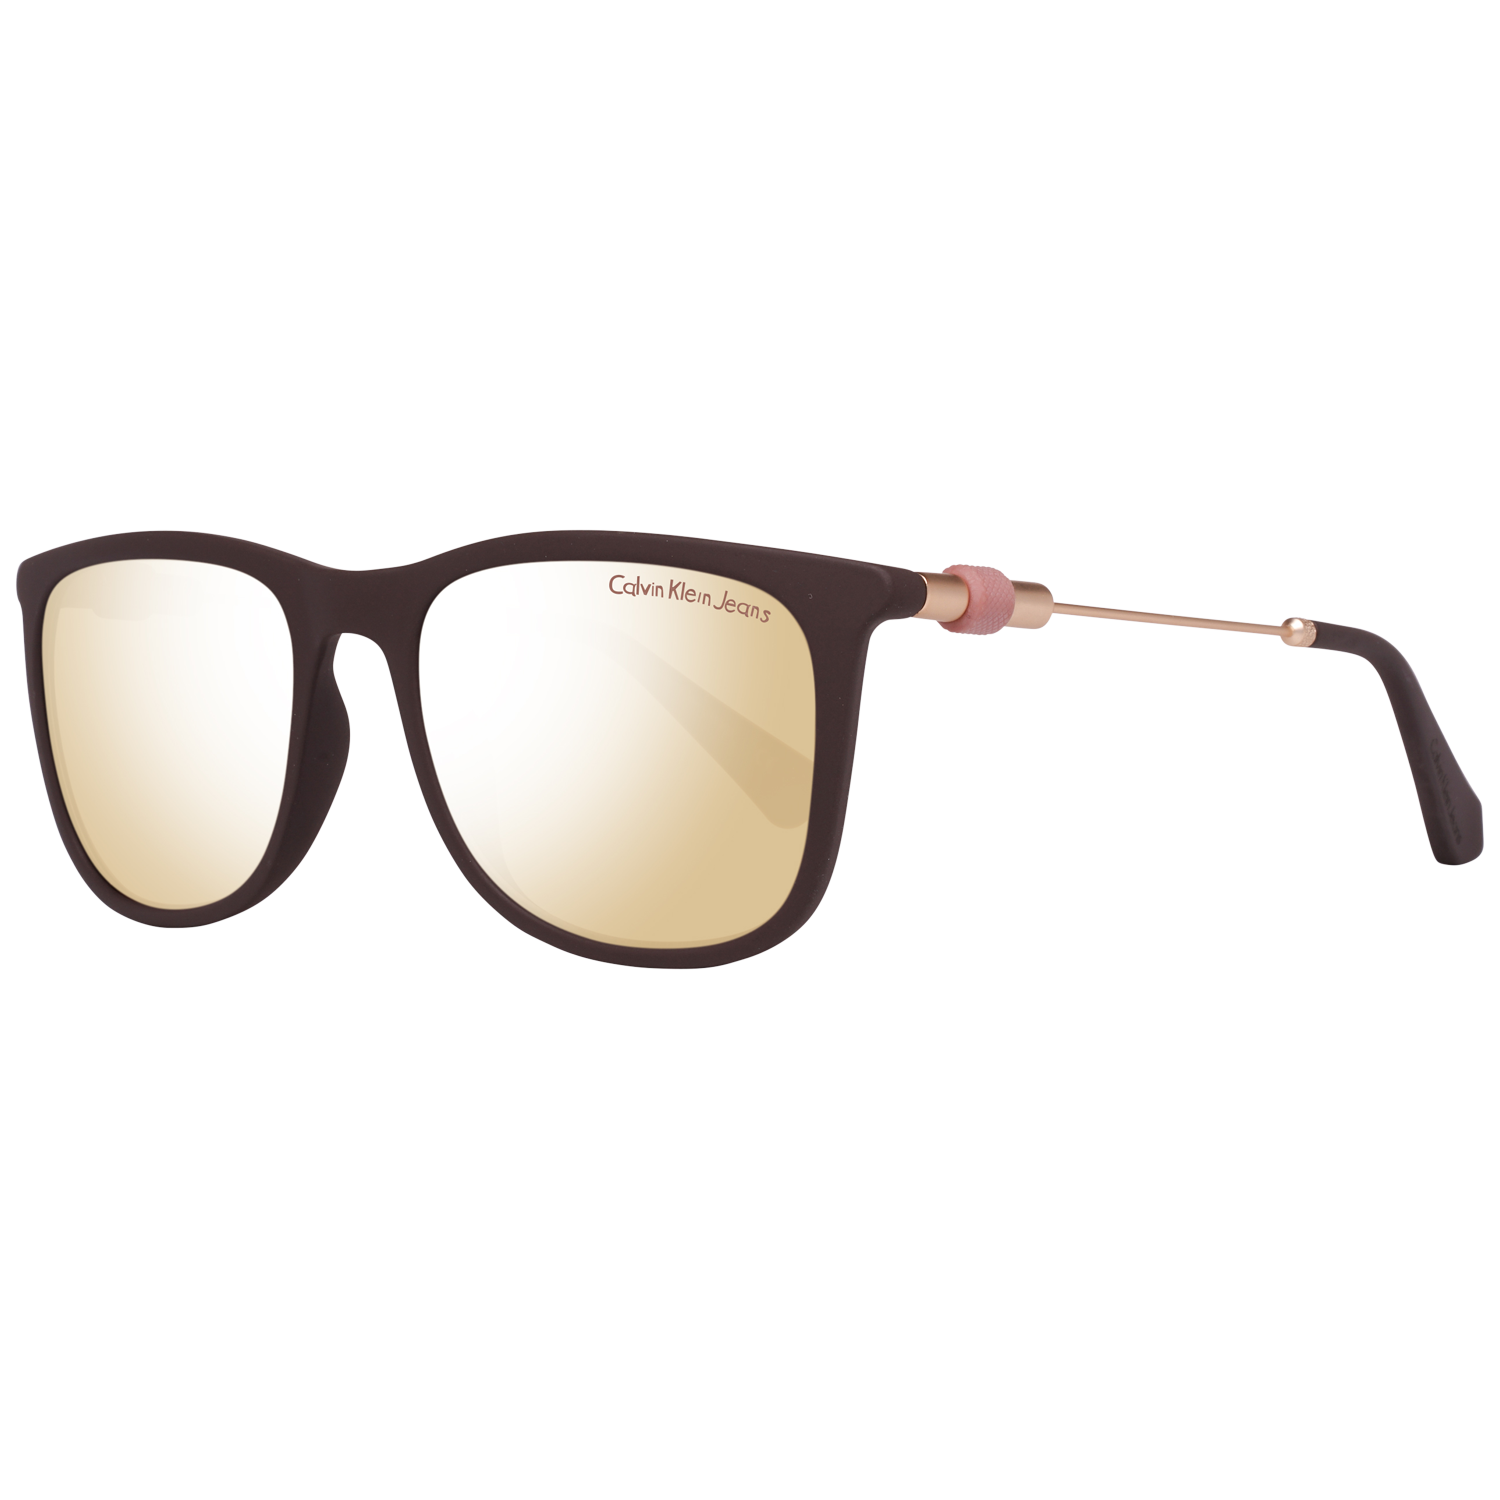 Calvin Klein Sunglasses CKJ507S 256 53